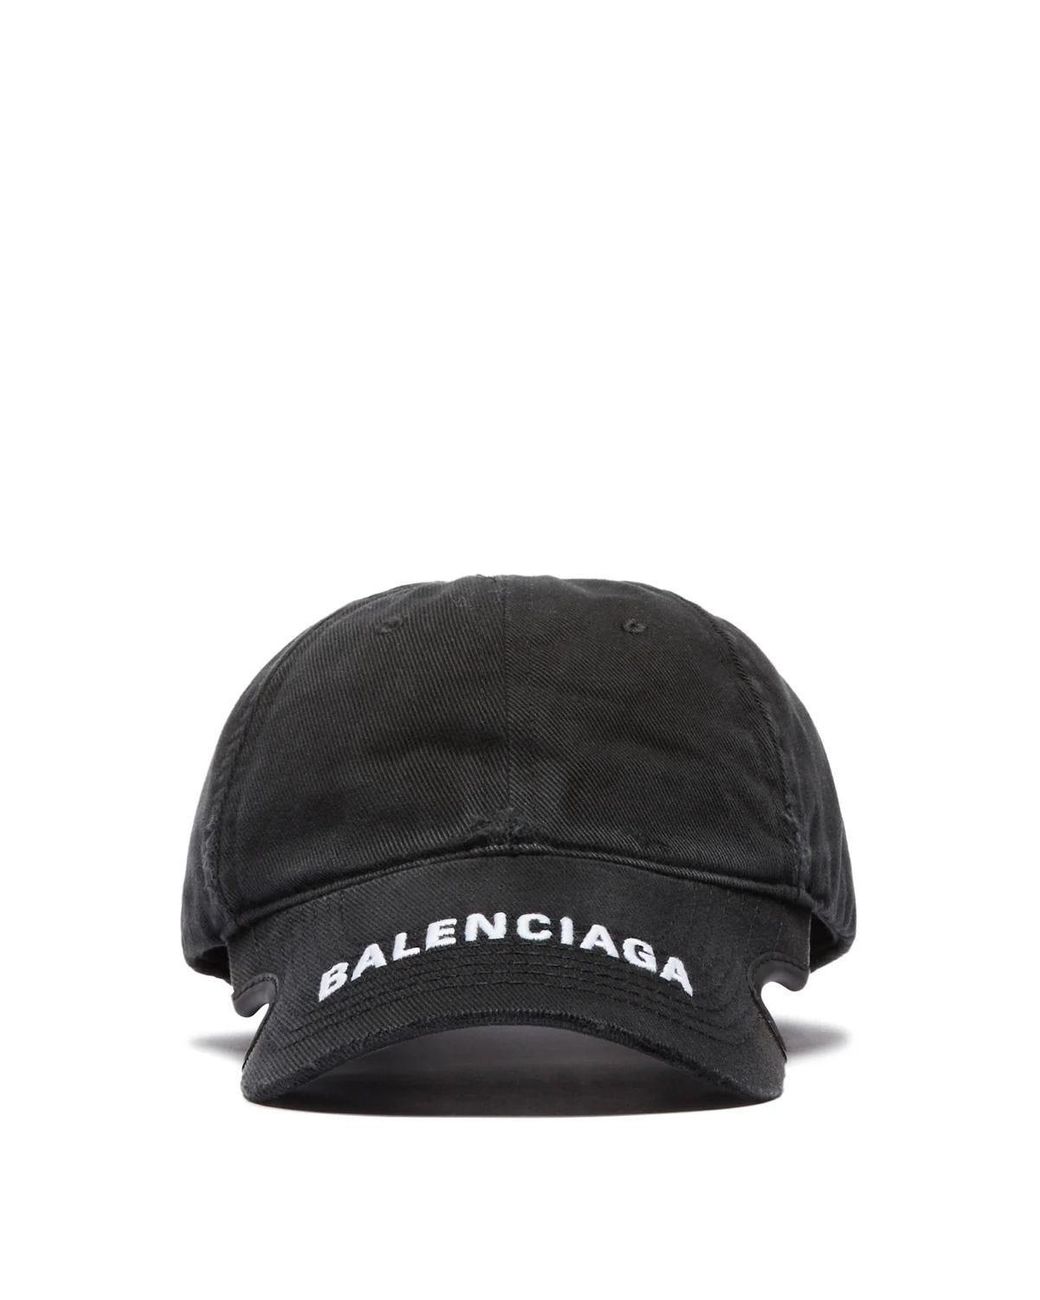 Balenciaga Canvas Black Baseball Hat for Men - Save 4% | Lyst